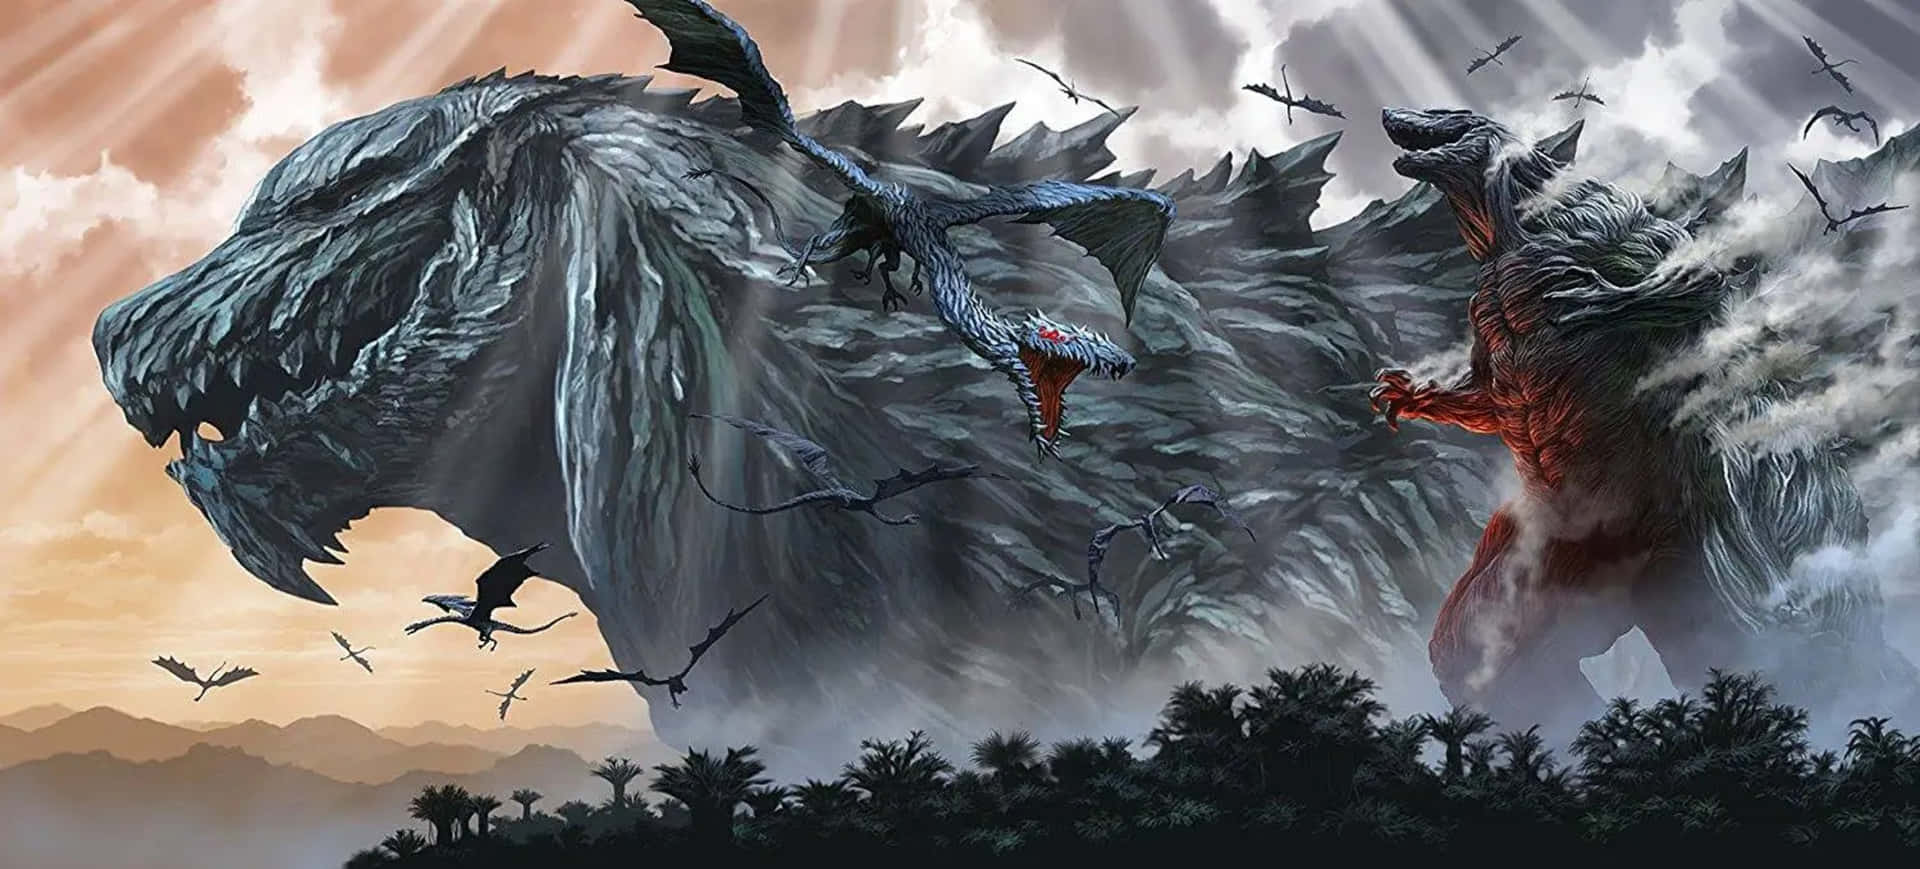 Mighty Godzilla Earth Roaring in Destruction Wallpaper